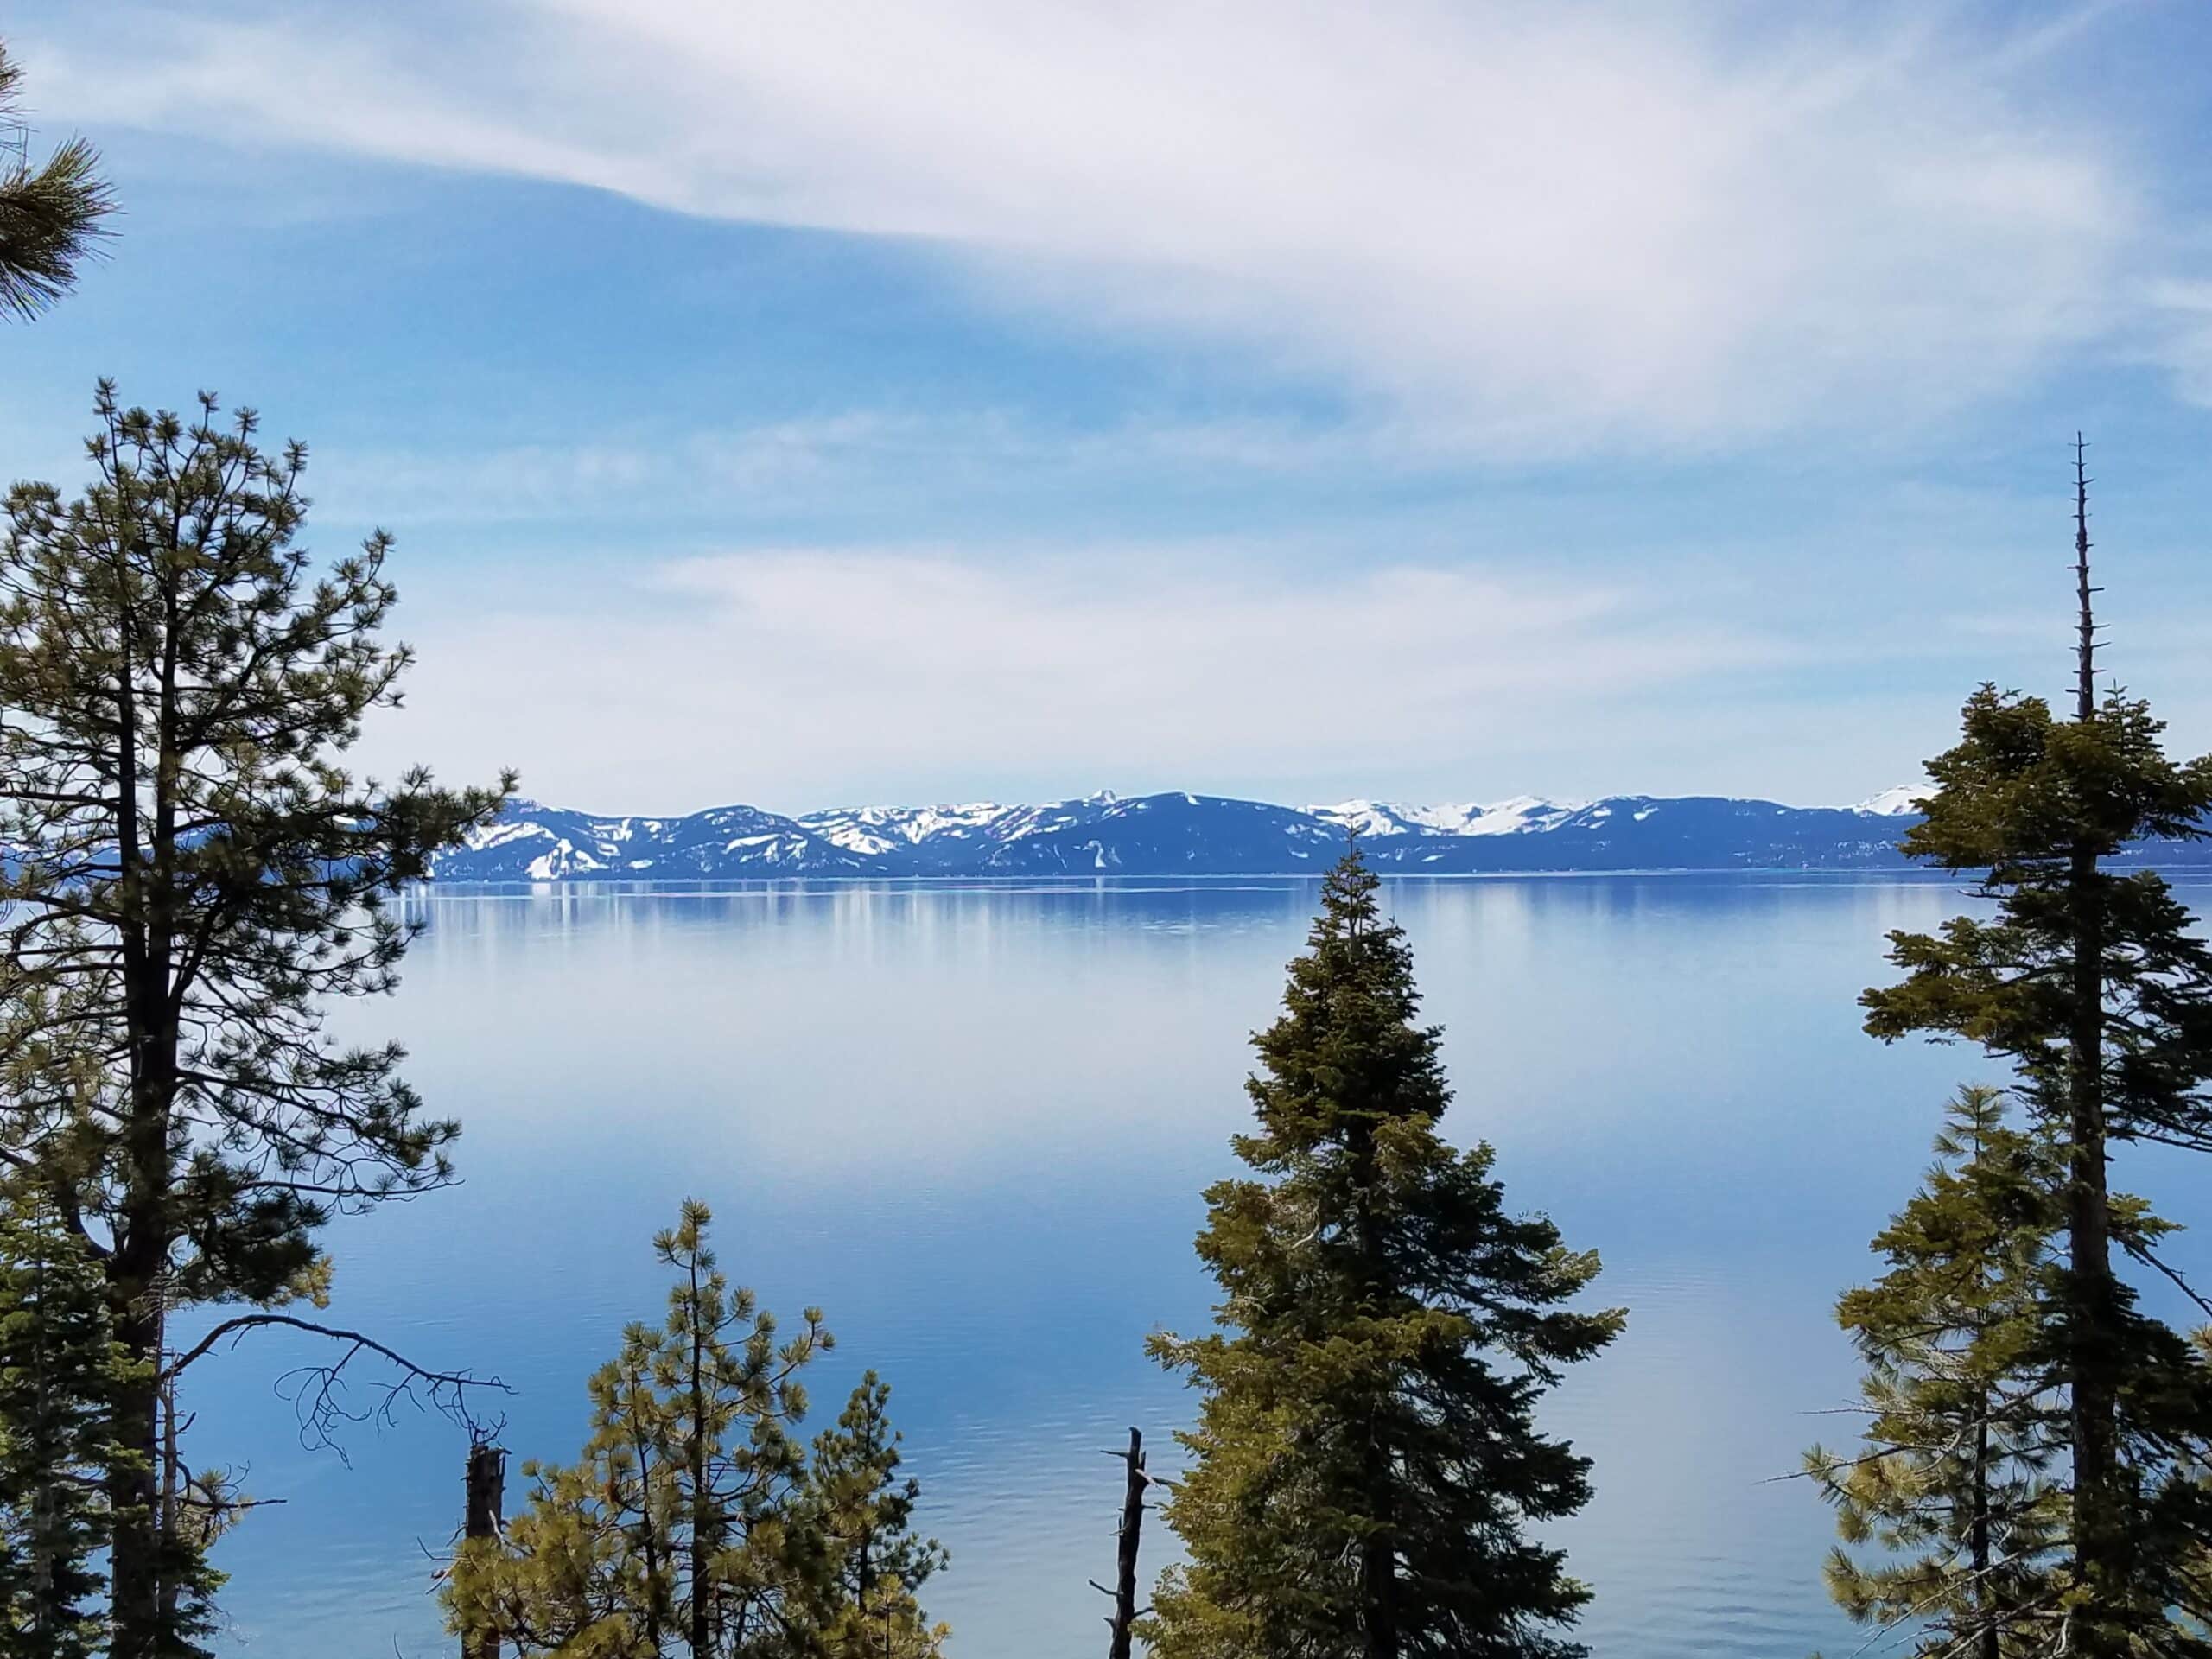 https://tataandhoward.com/wp-content/uploads/2019/09/Lake-Tahoe-May-2019.jpg